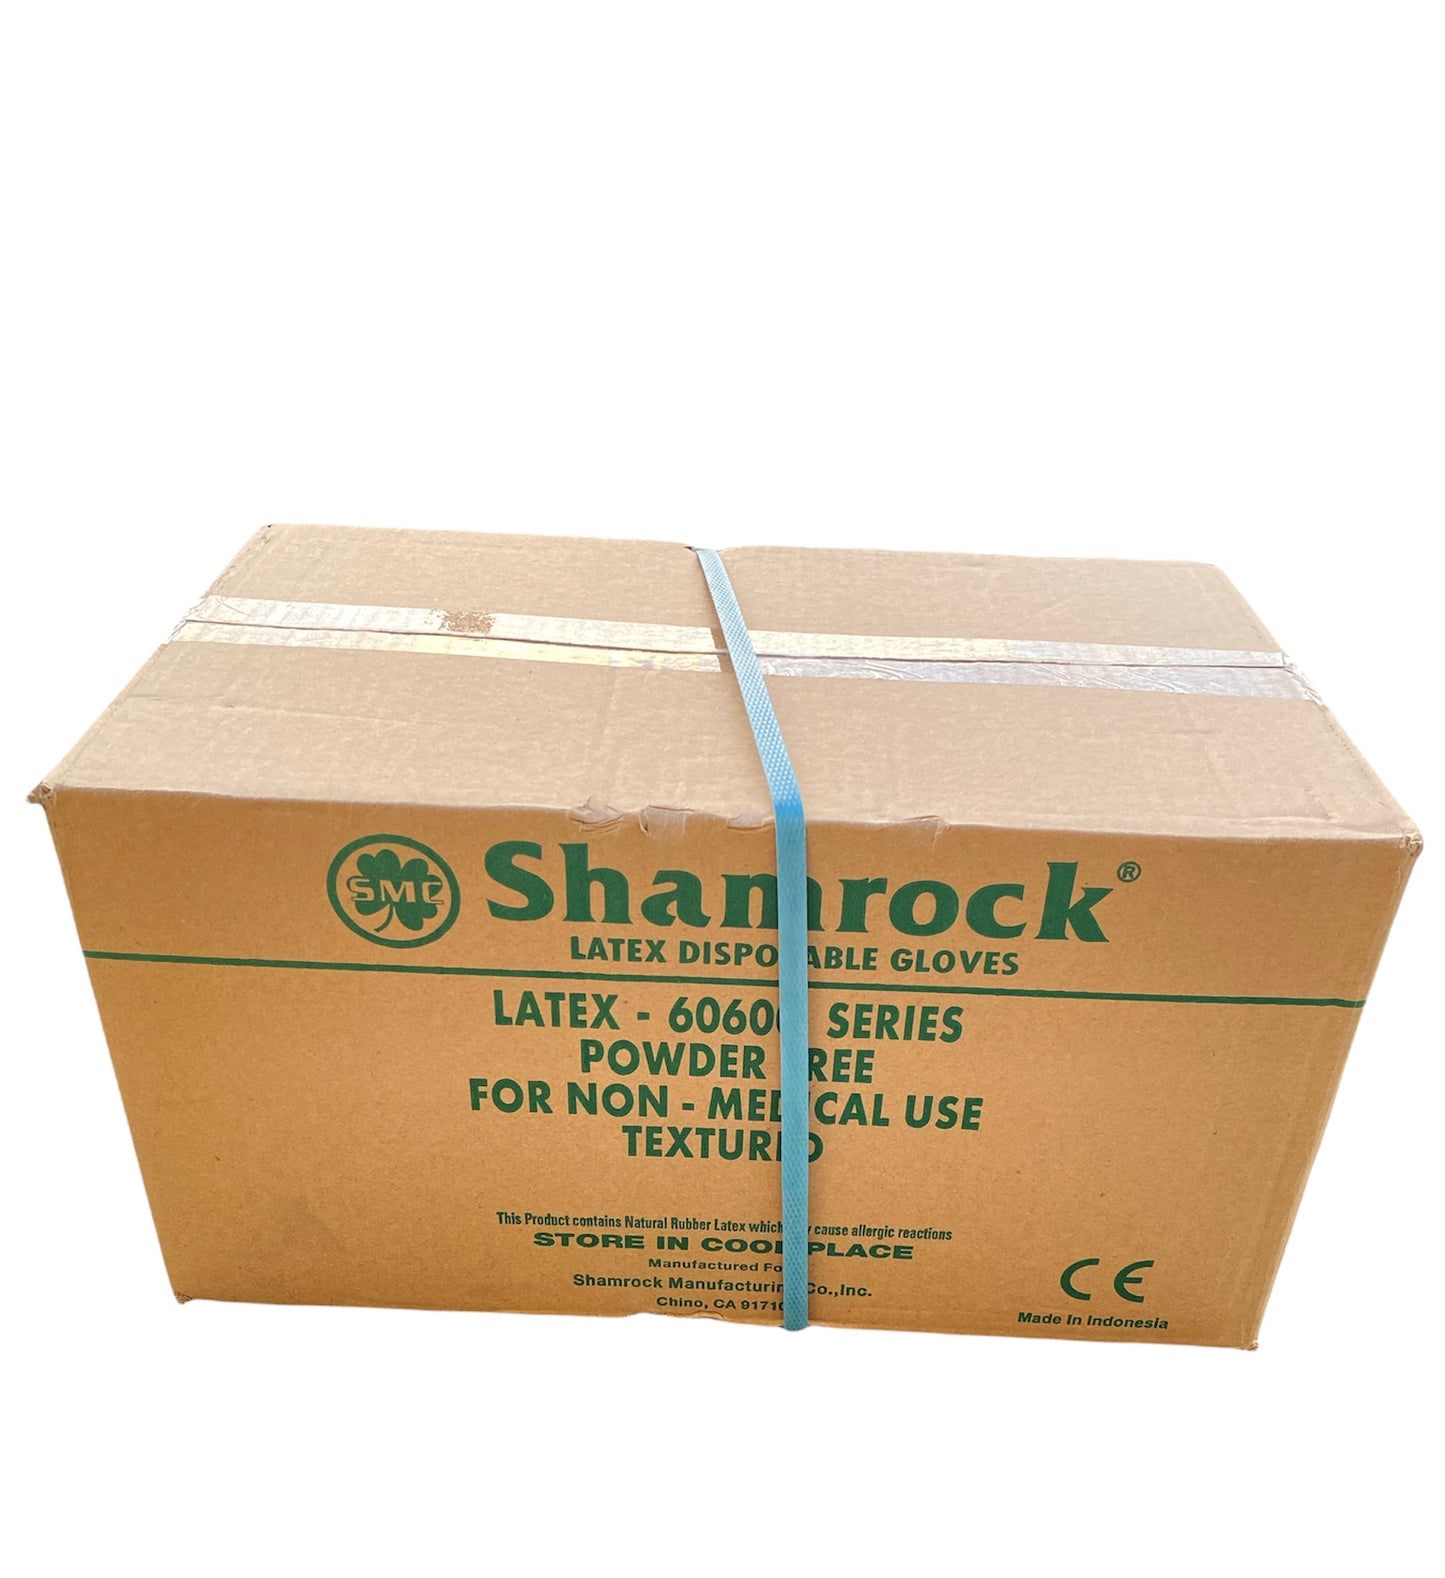 Shamrock Latex Gloves powder free (Case 10 box)
Medium - Premier Nail Supply 